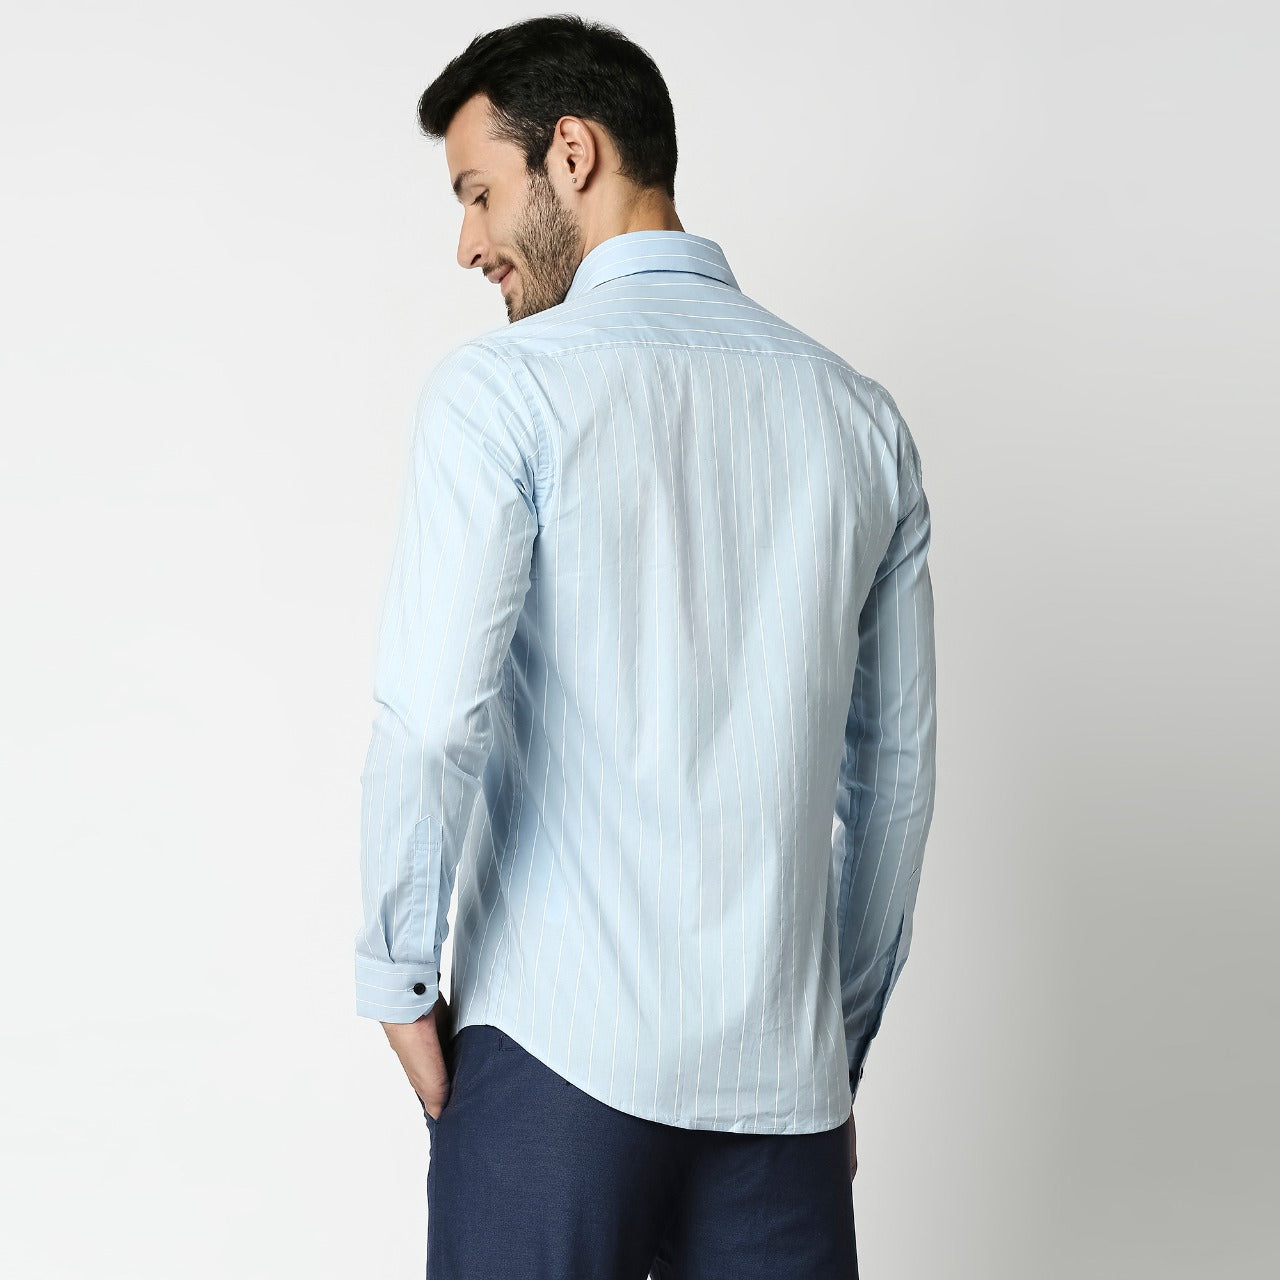 Fostino Stripes Light Blue Full Sleeves Shirt - Fostino - Shirts